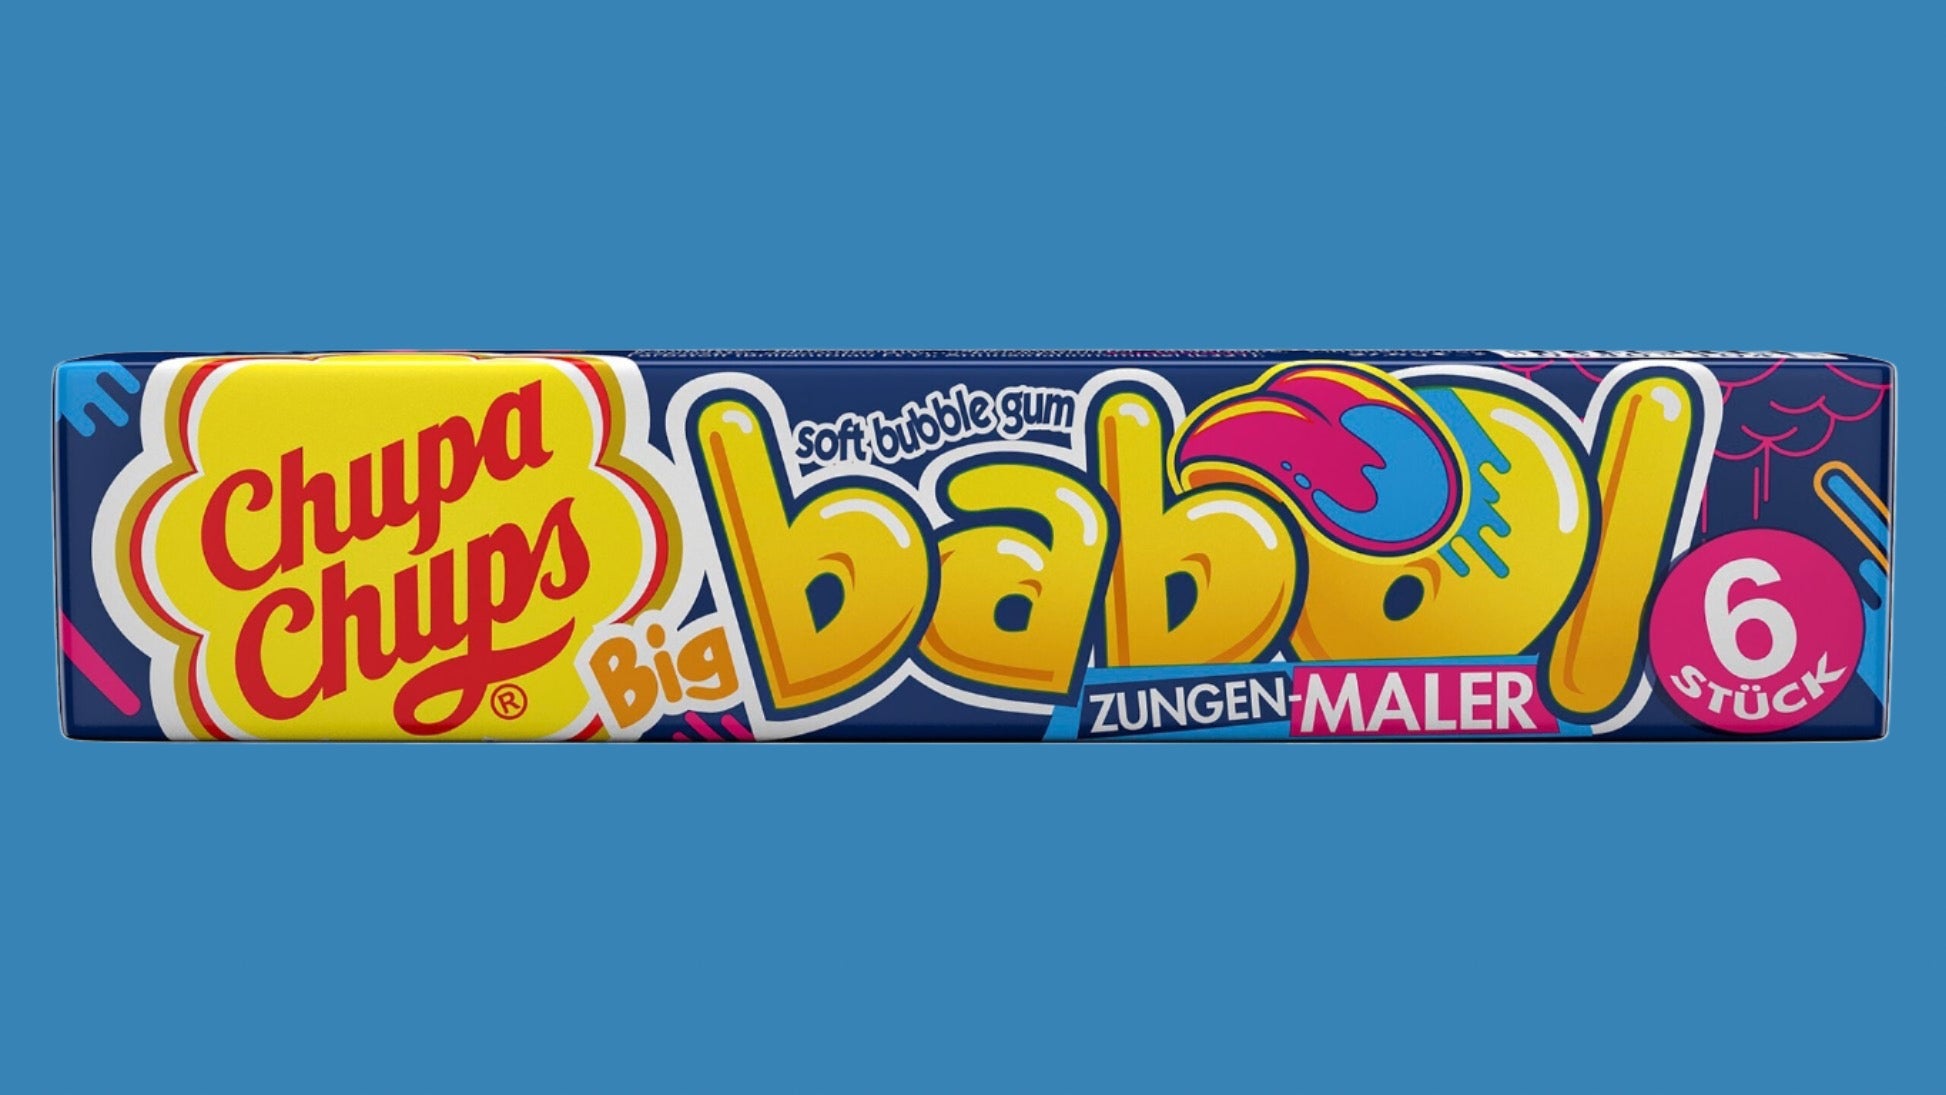 Chupa Chups Big Babol Zungenmaler Gum (Netherlands)